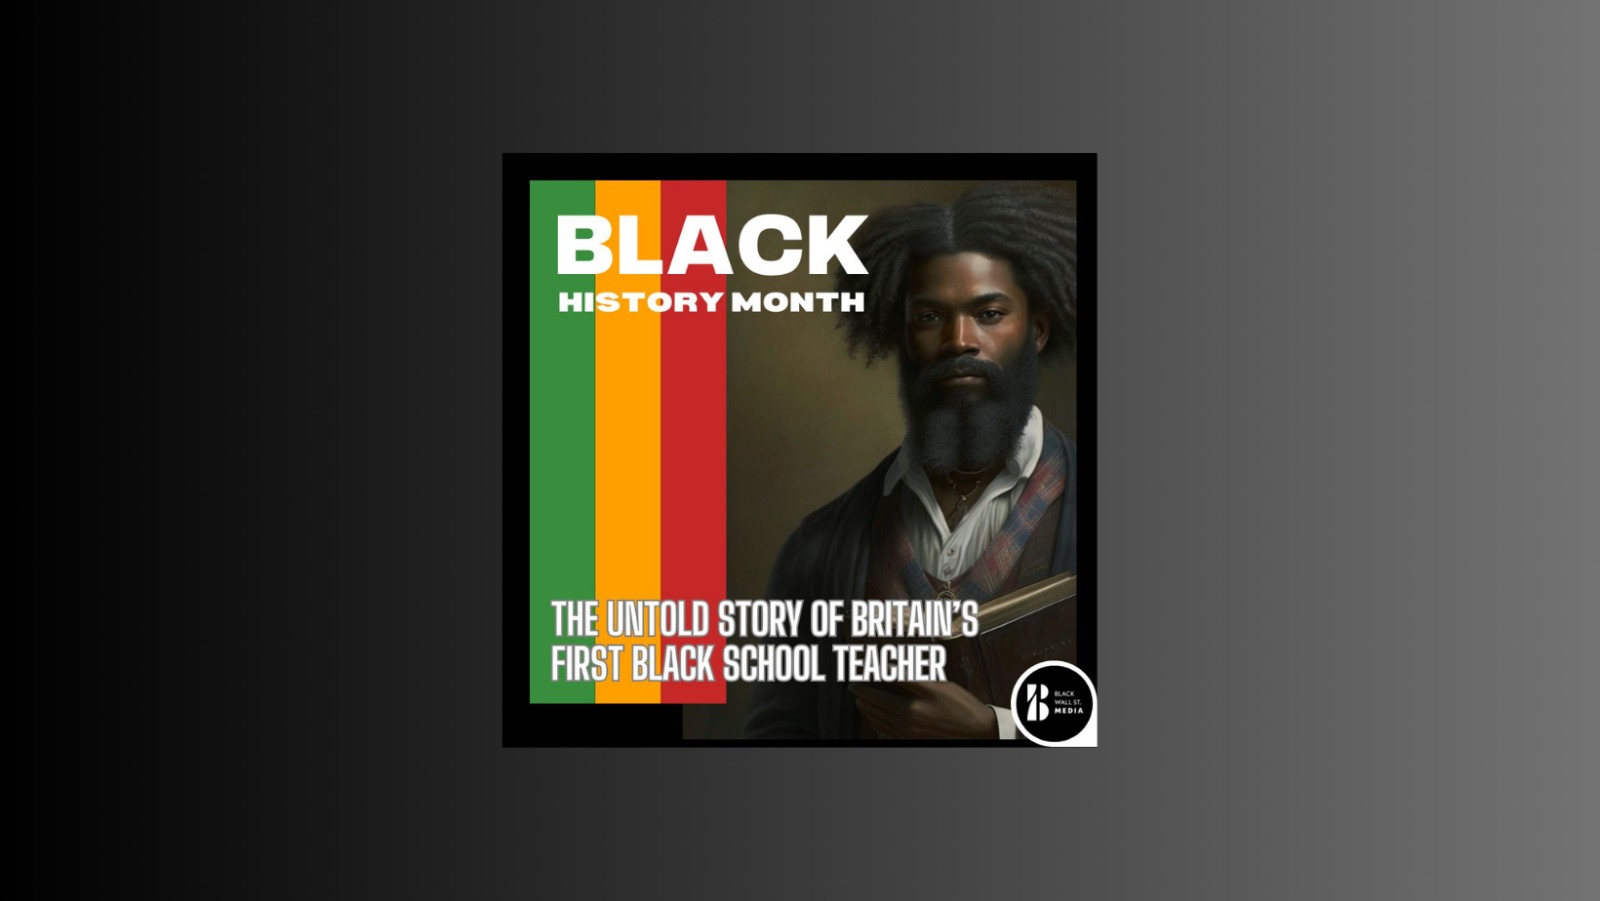 The untold story of Britain’s first black school teacher